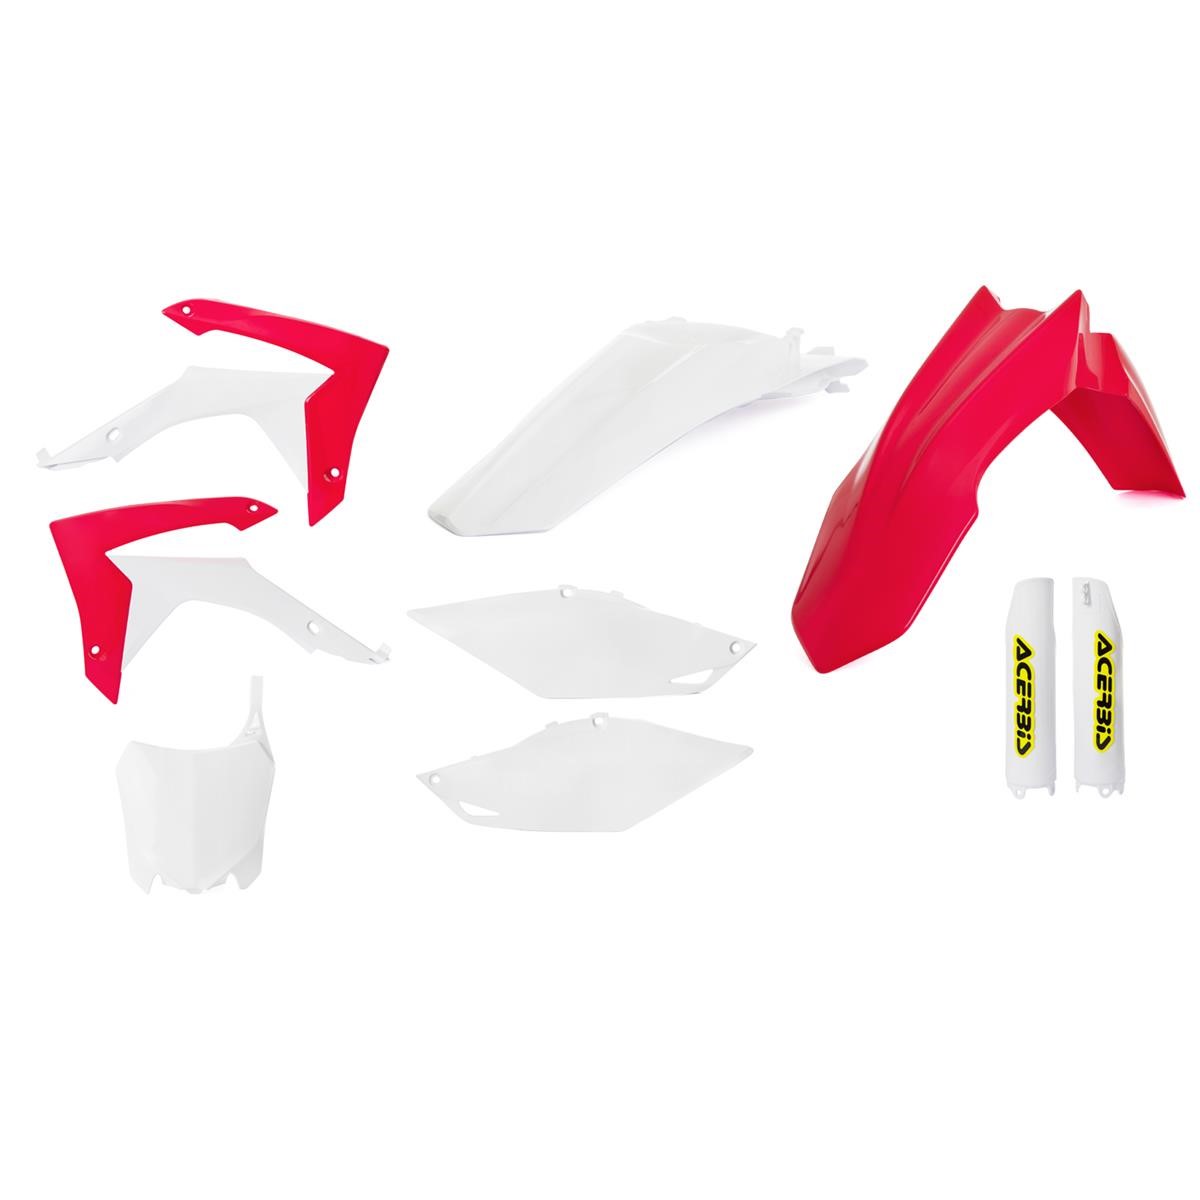 Acerbis Kit Plastiche completo Full-Kit Honda CRF 250 14-17, CRF 450 13-16, Replica